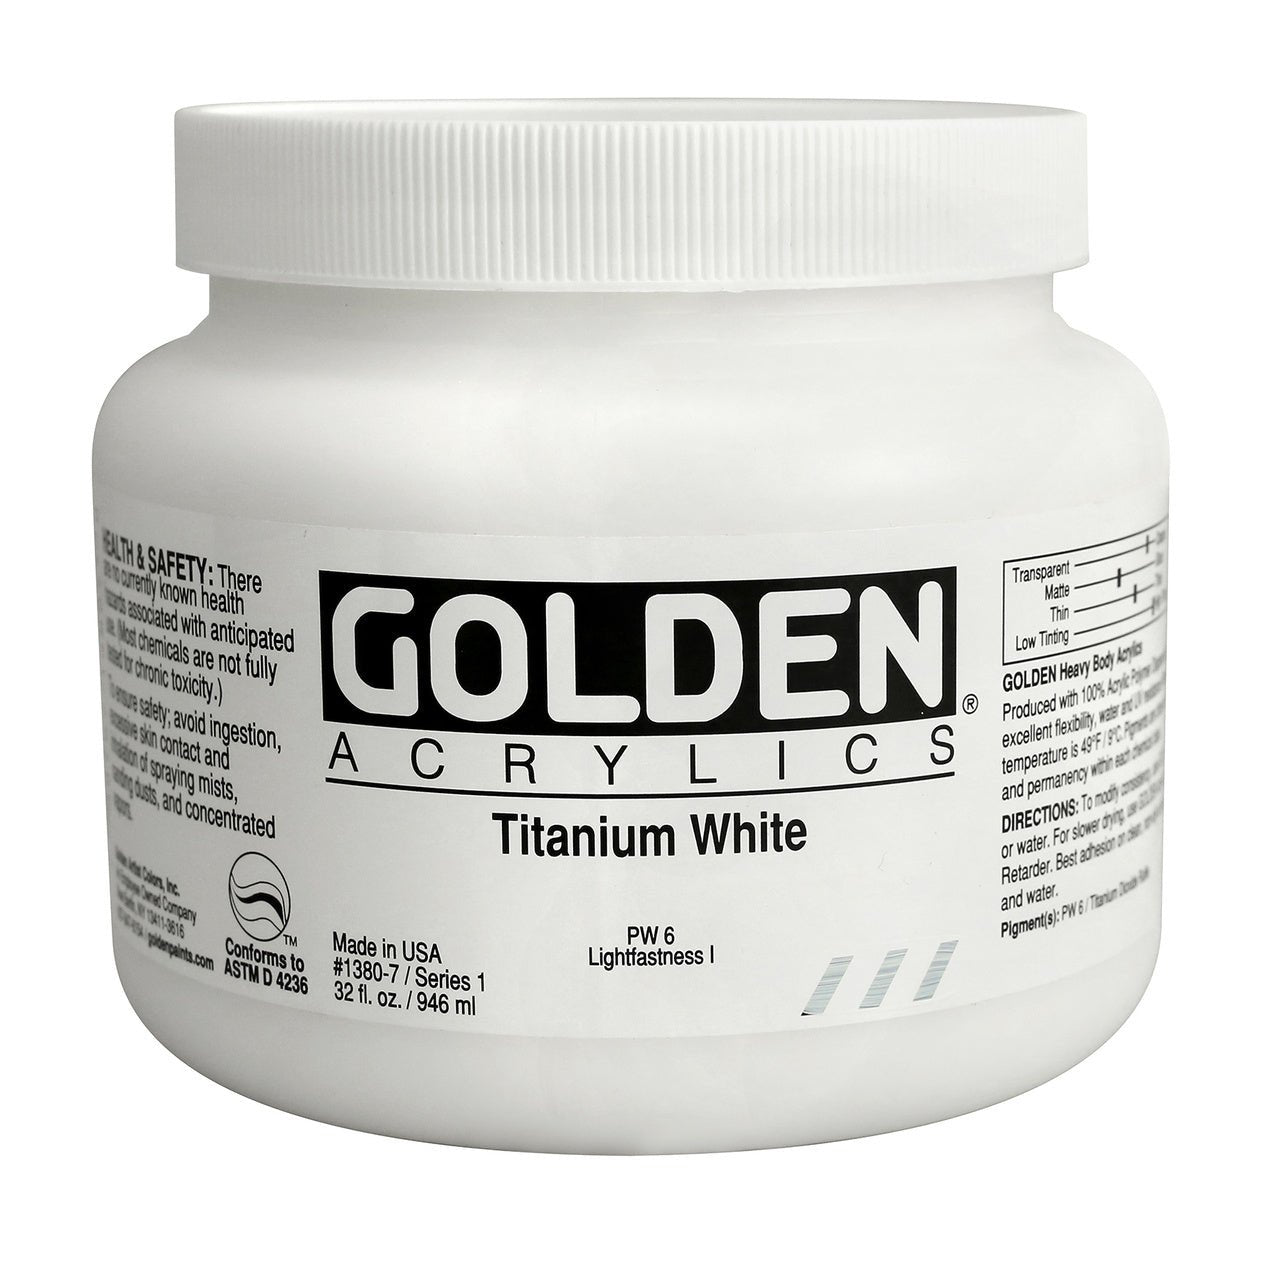 Golden Heavy Body Acrylic Titanium White 32 oz - merriartist.com